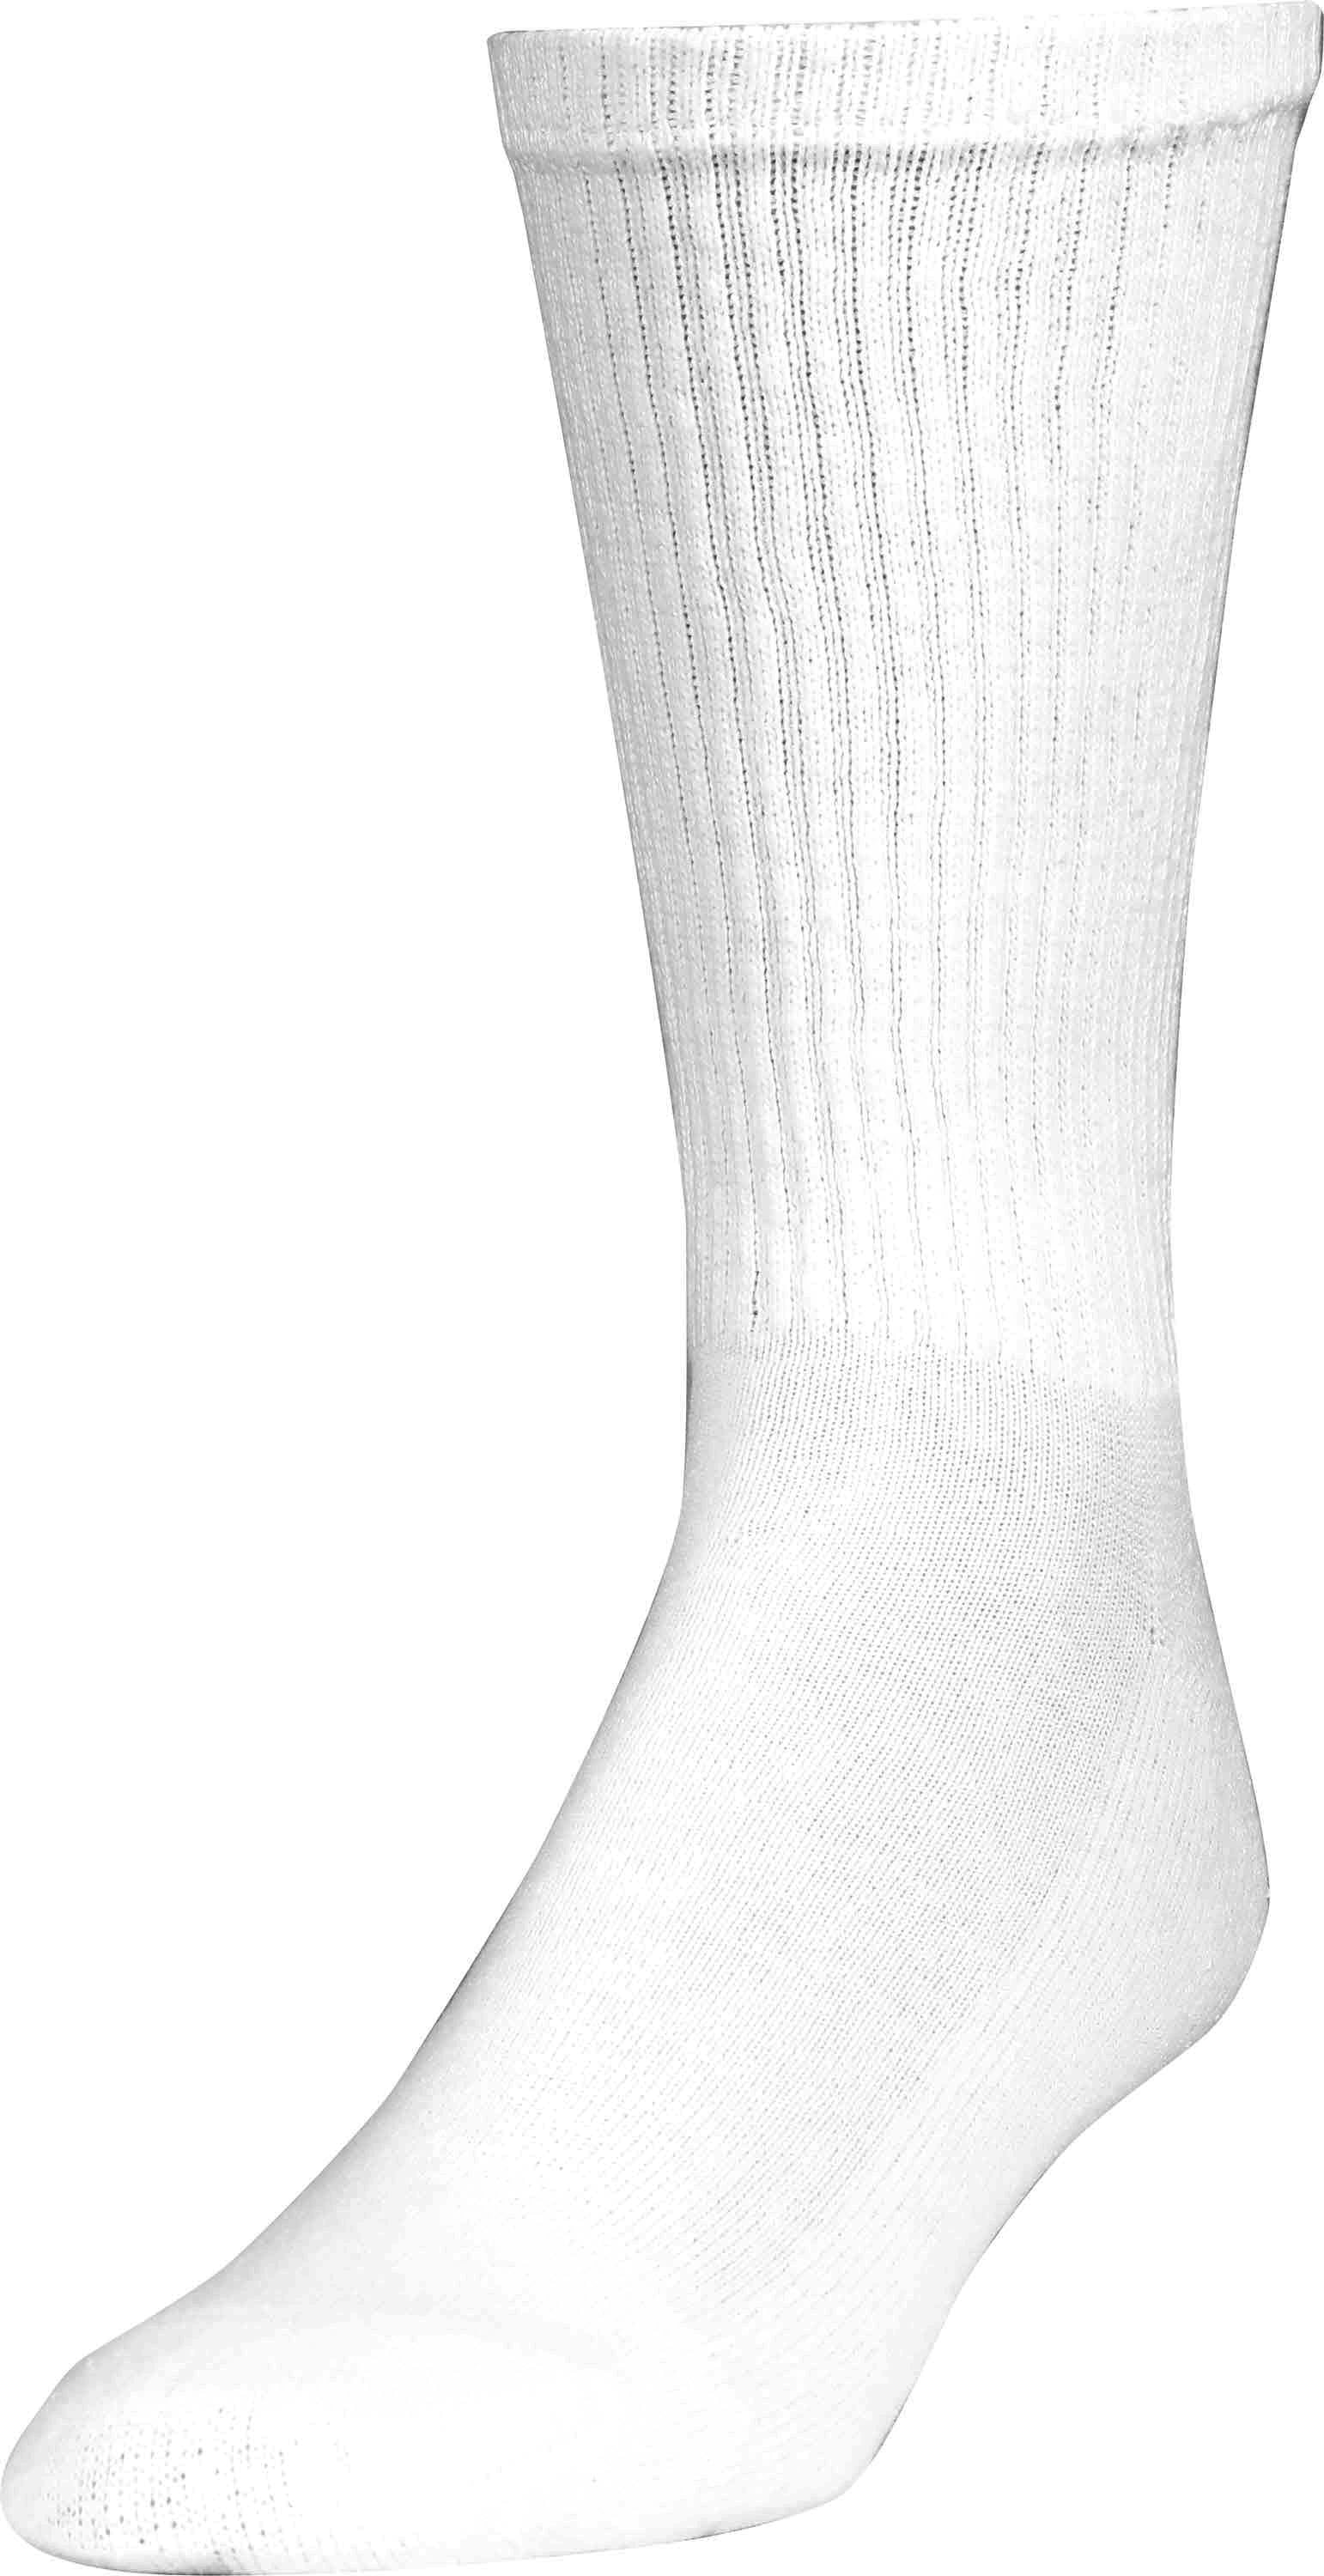 Men's Big & Tall Performance Cotton moveFX White Crew Socks, 10-pack ...